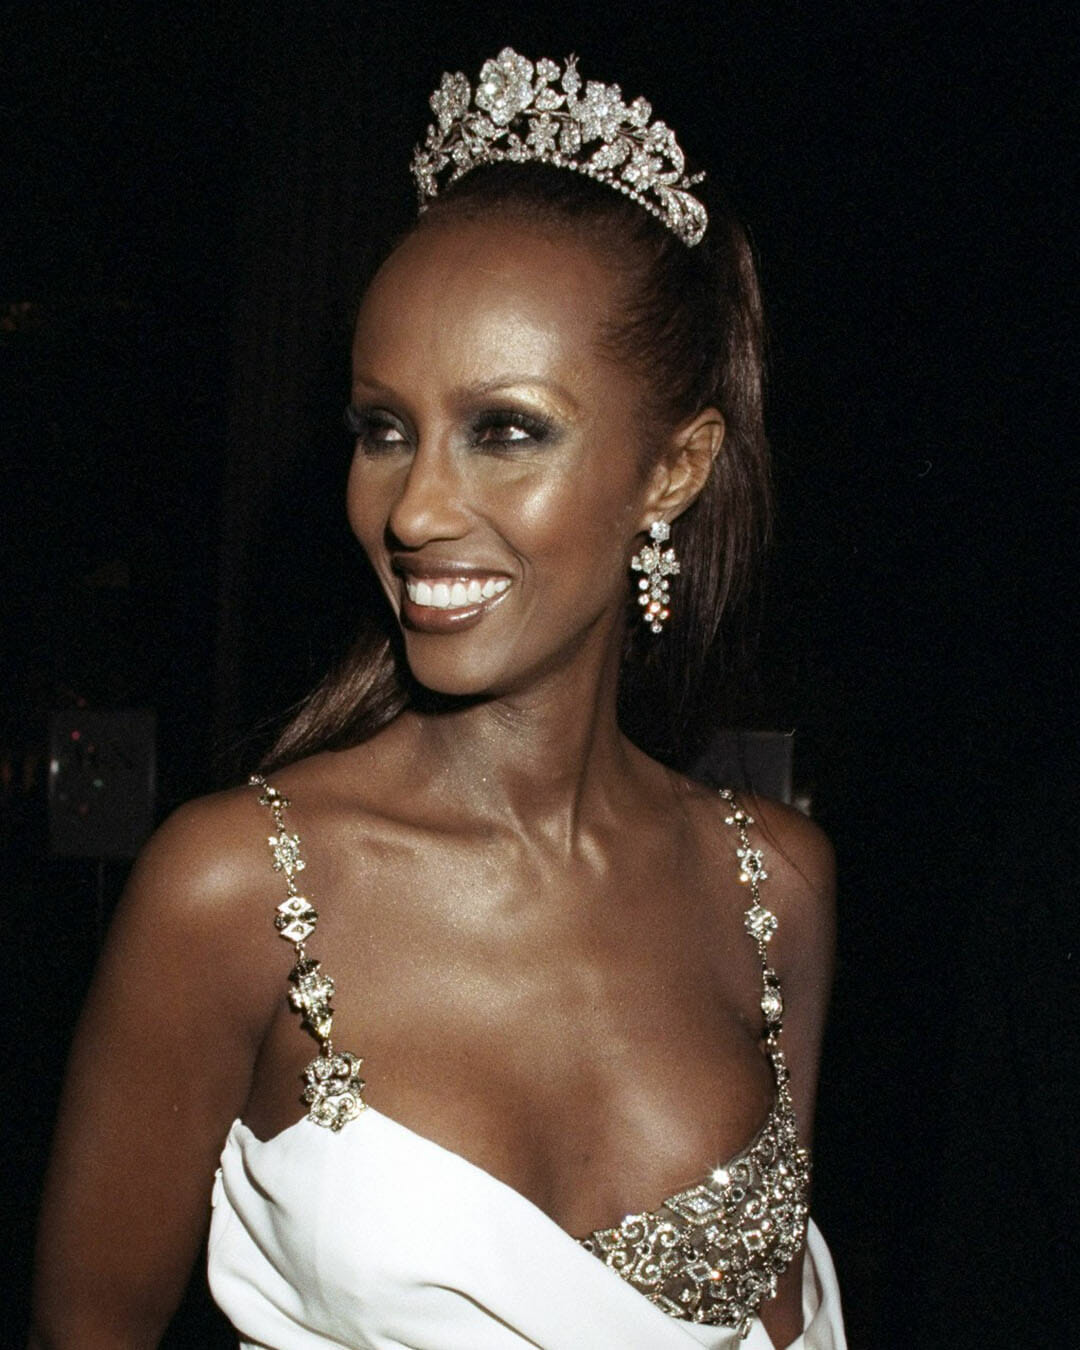 Iman shined in a natural diamond tiara at the 1997 Met Gala.